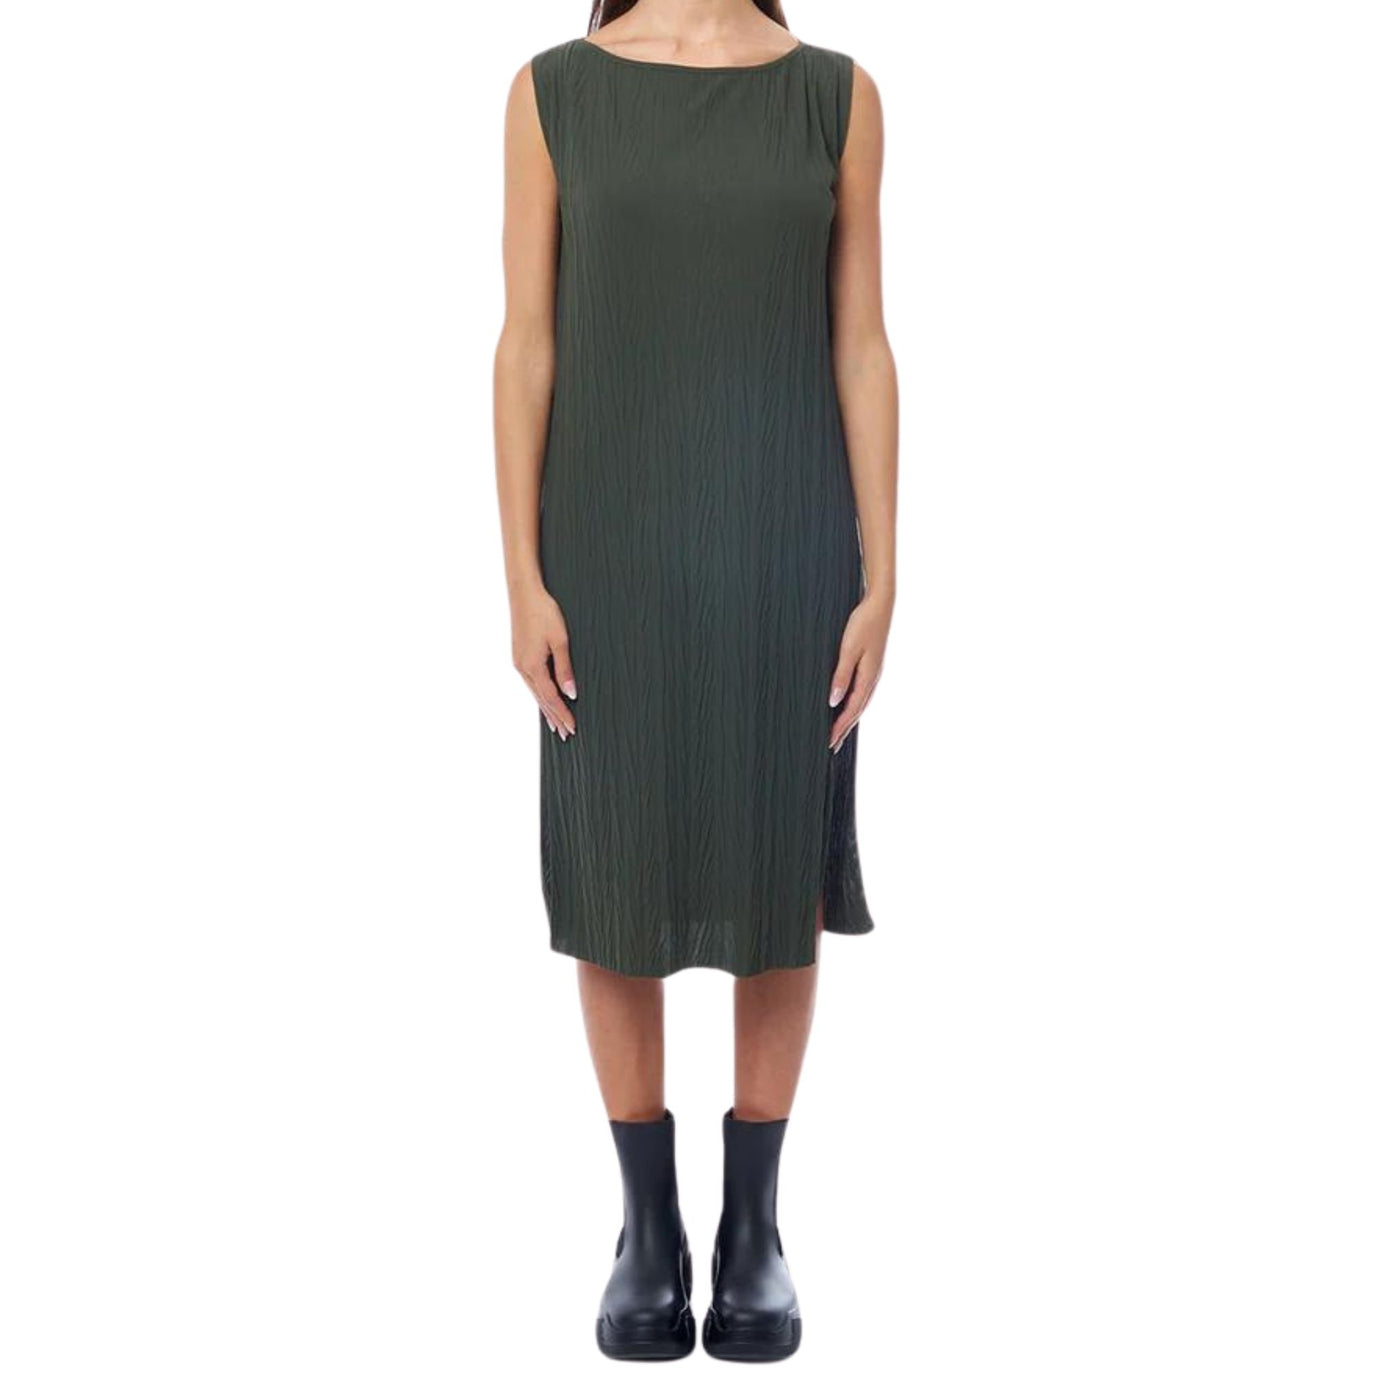 Women's dress with side slits